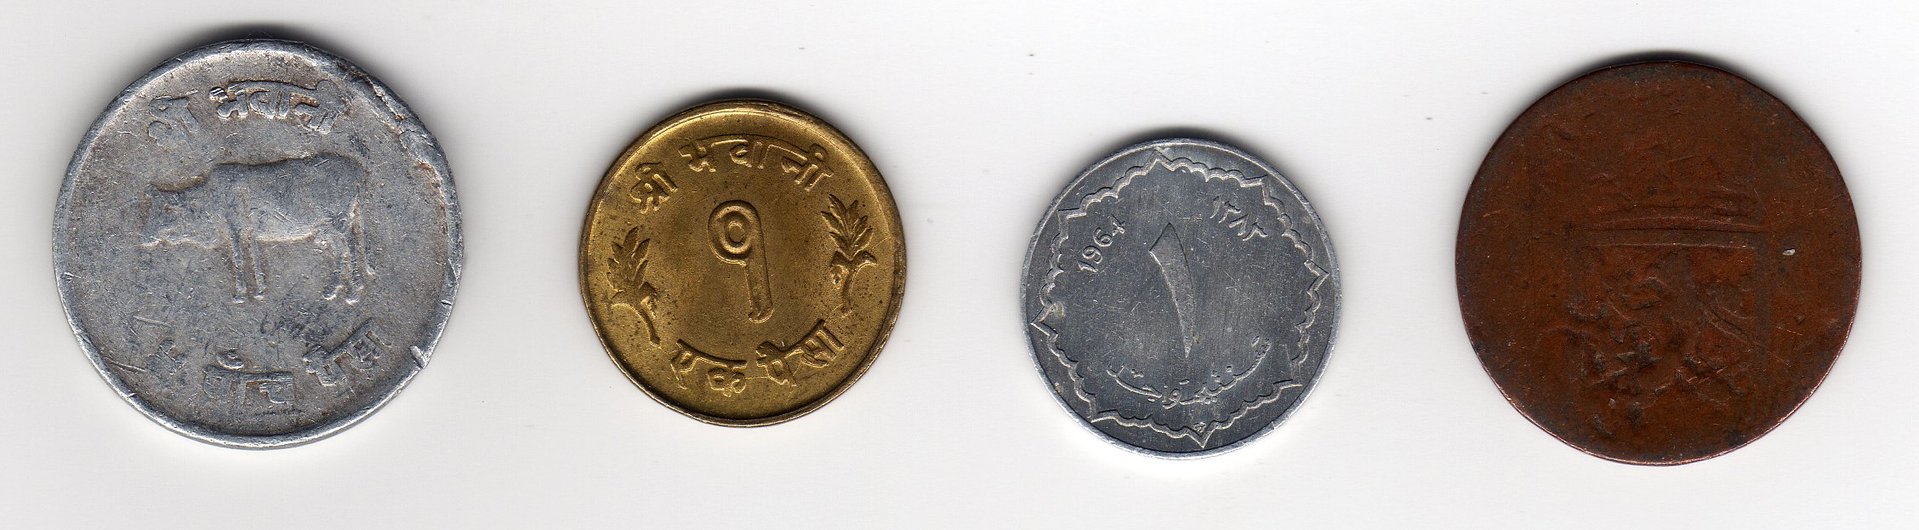 coin543.jpg